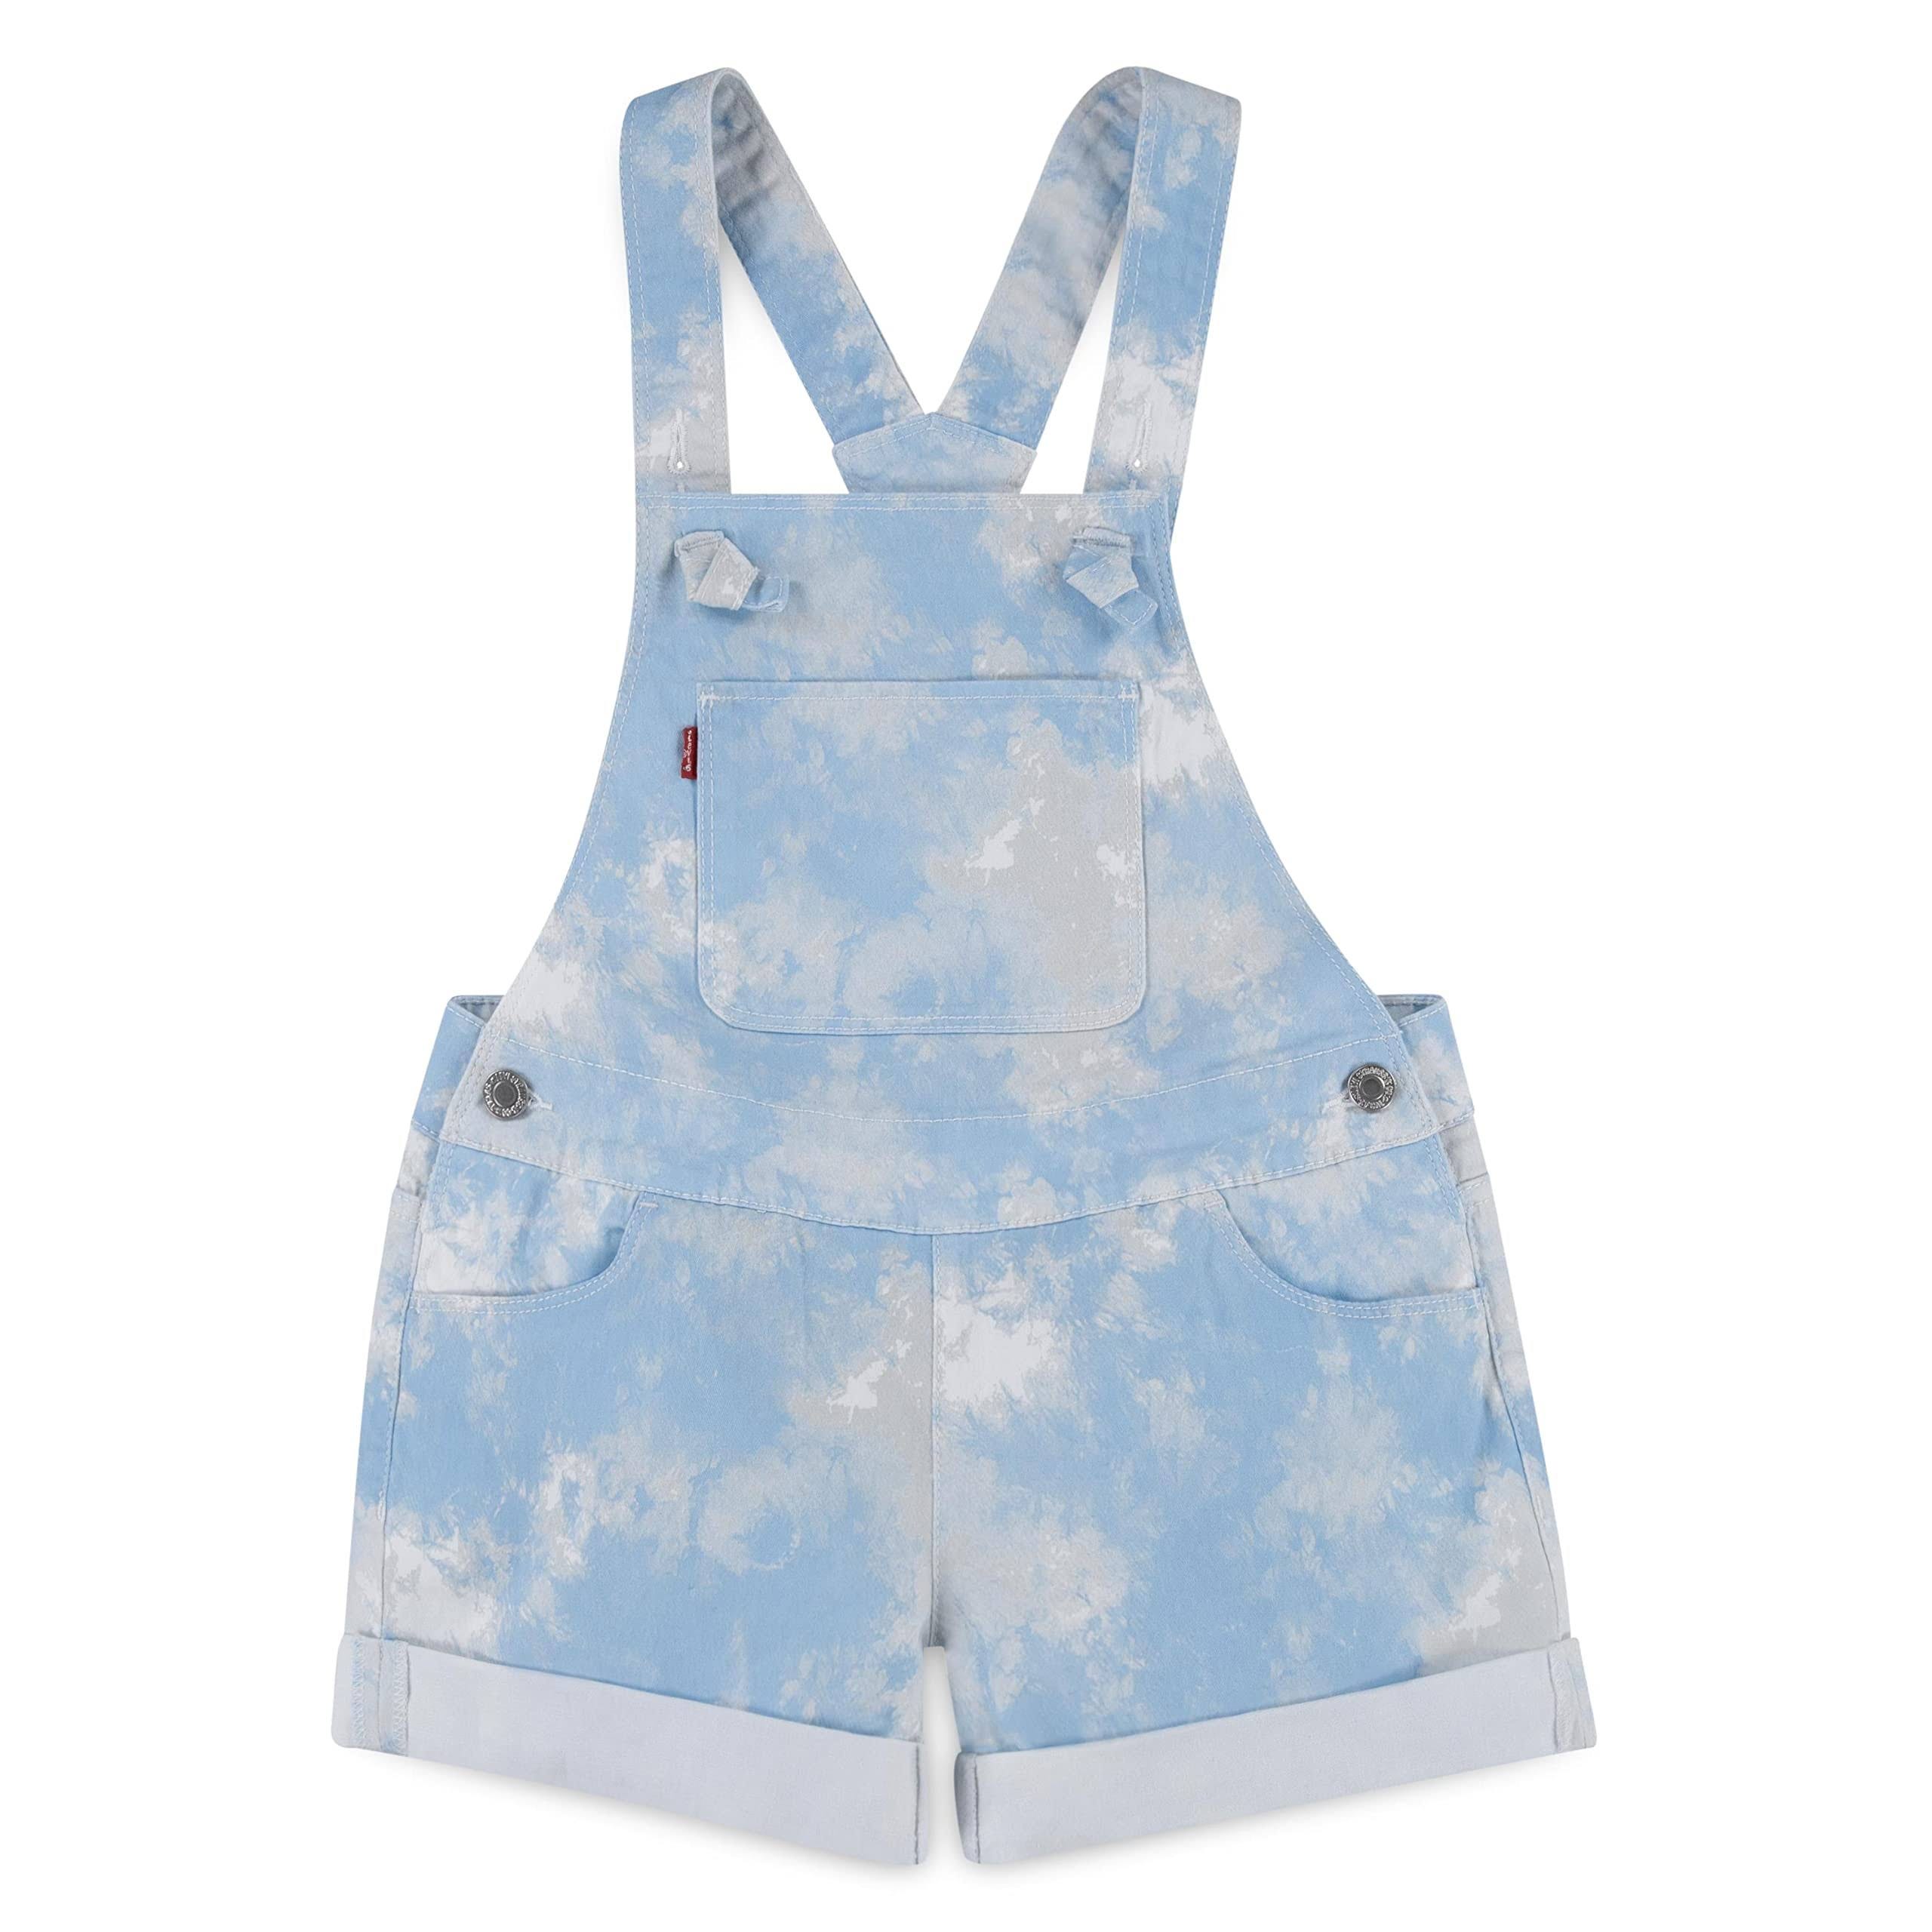 Levi's Soft Twill Jean Shortalls for Girls - Cloud Wash Design | Image